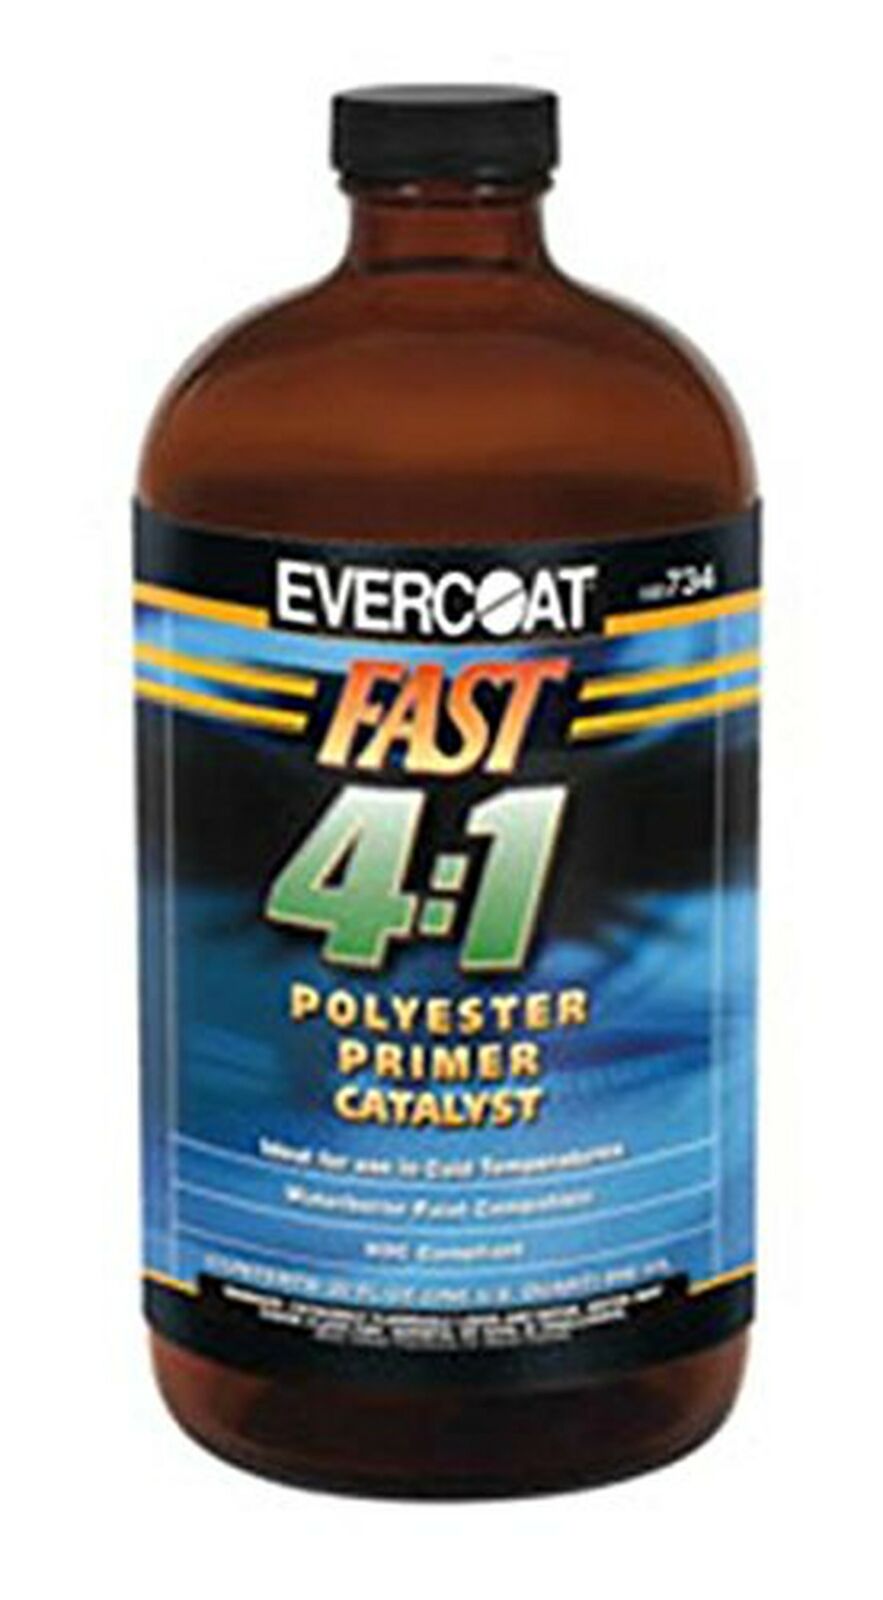 Evercoat FIB-734 Fast 4:1 Polyester Primer